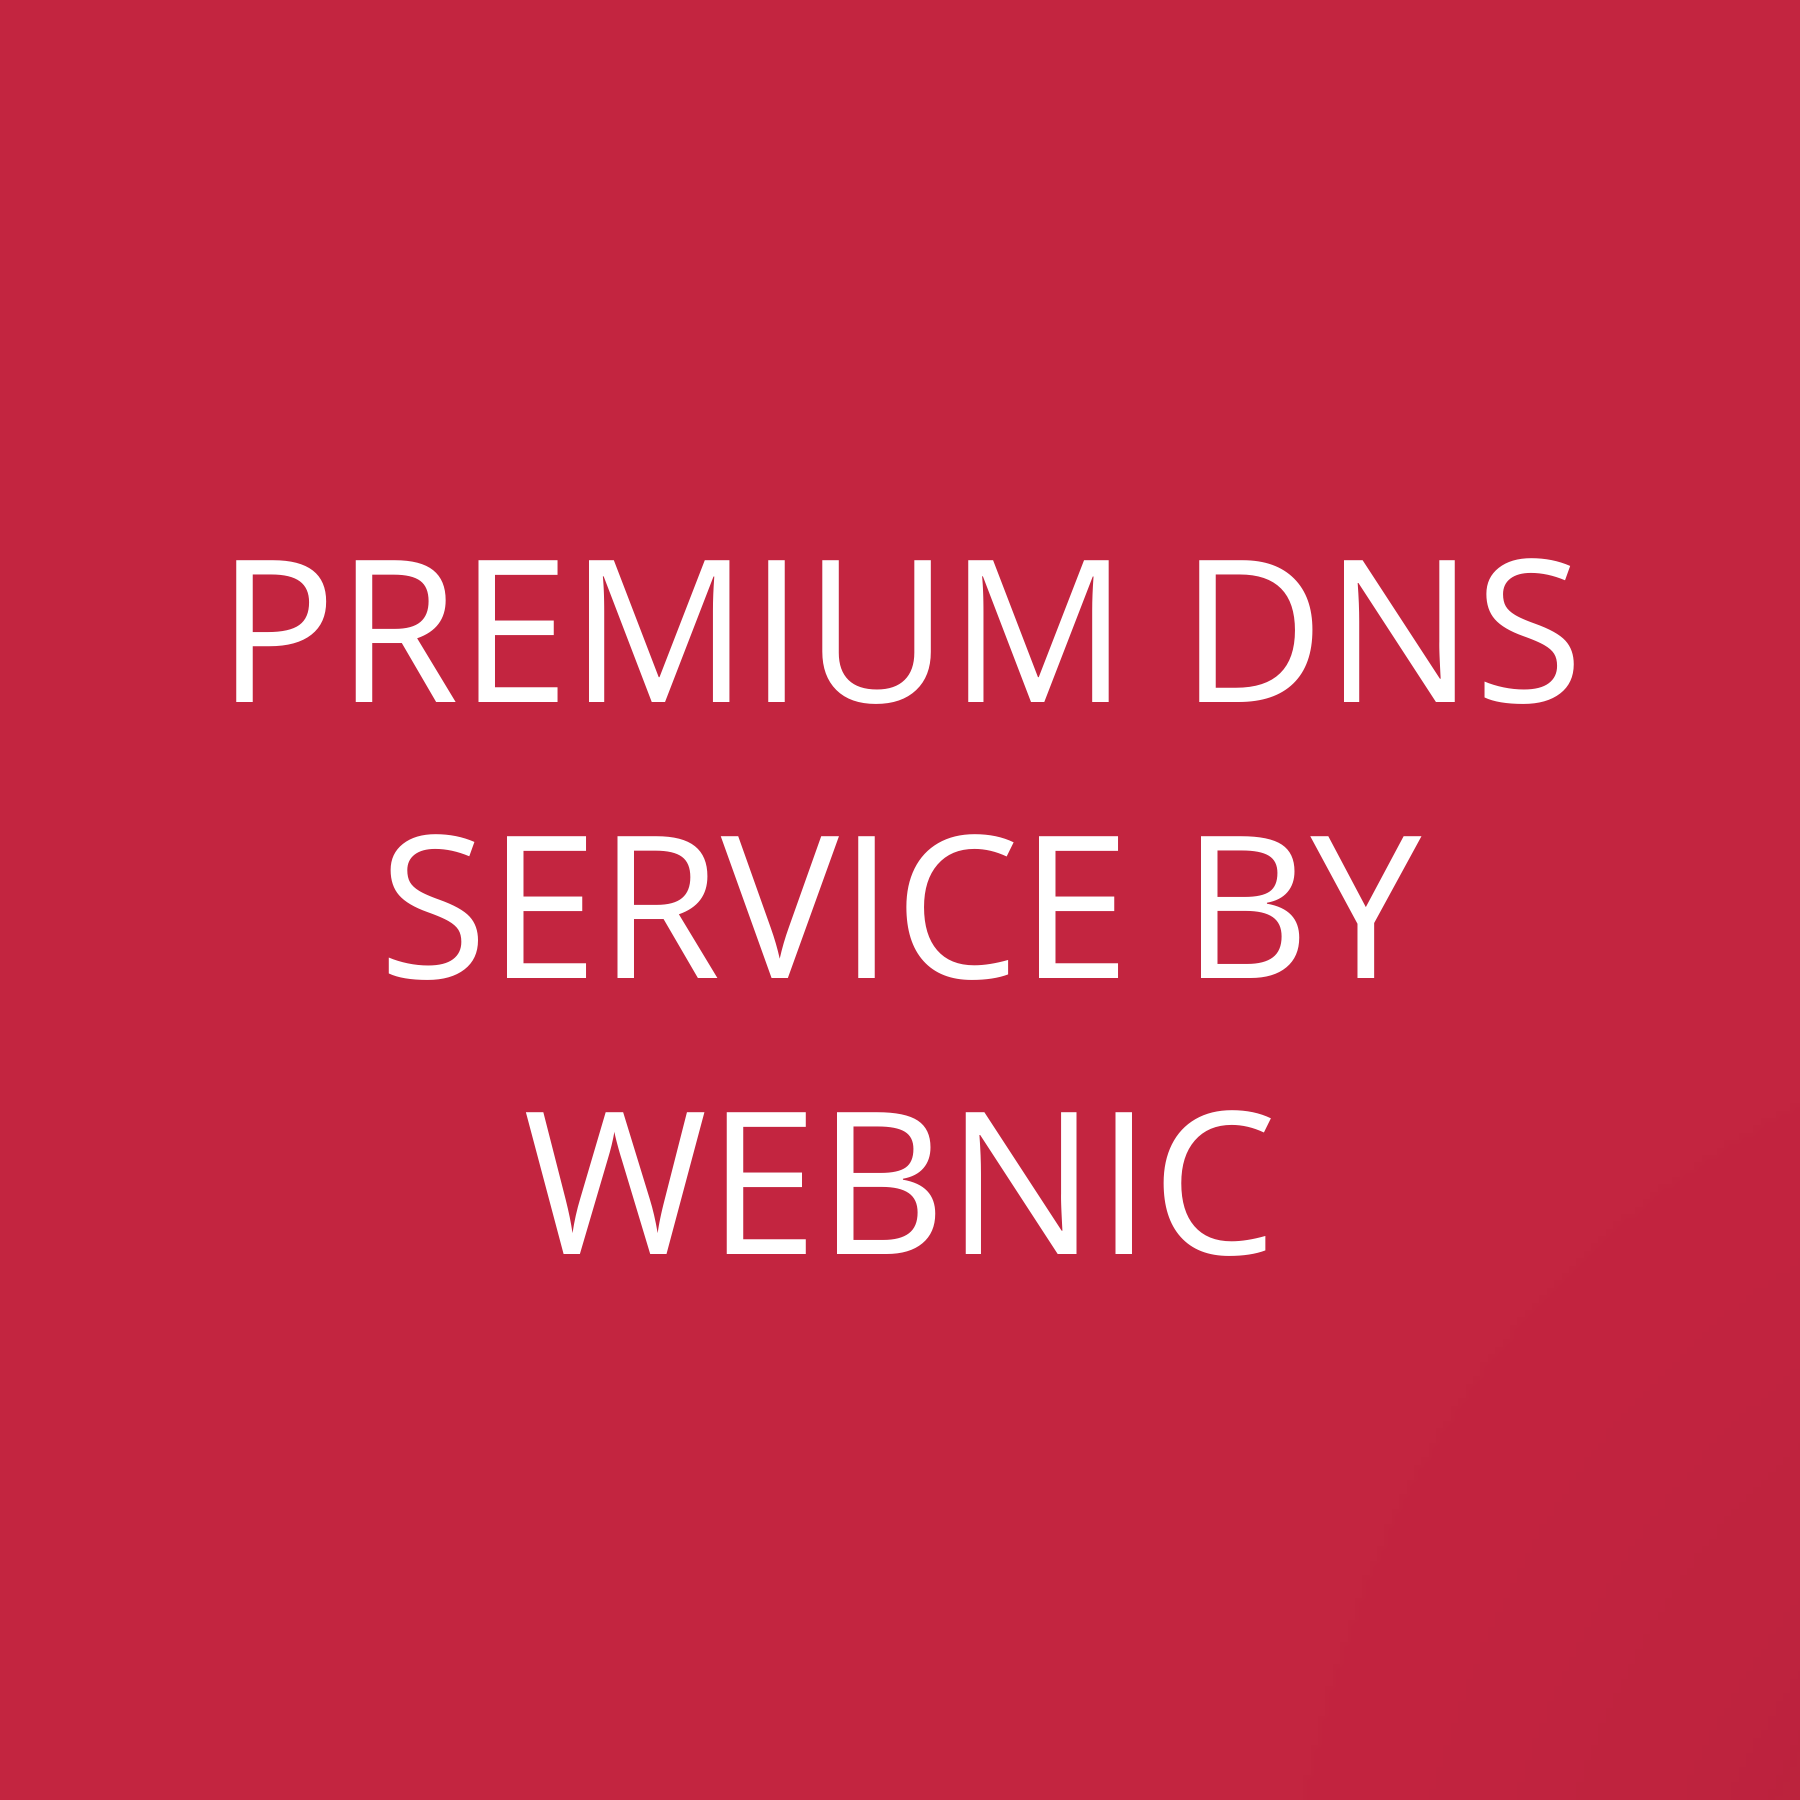 Premium DNS Service by WebNIC